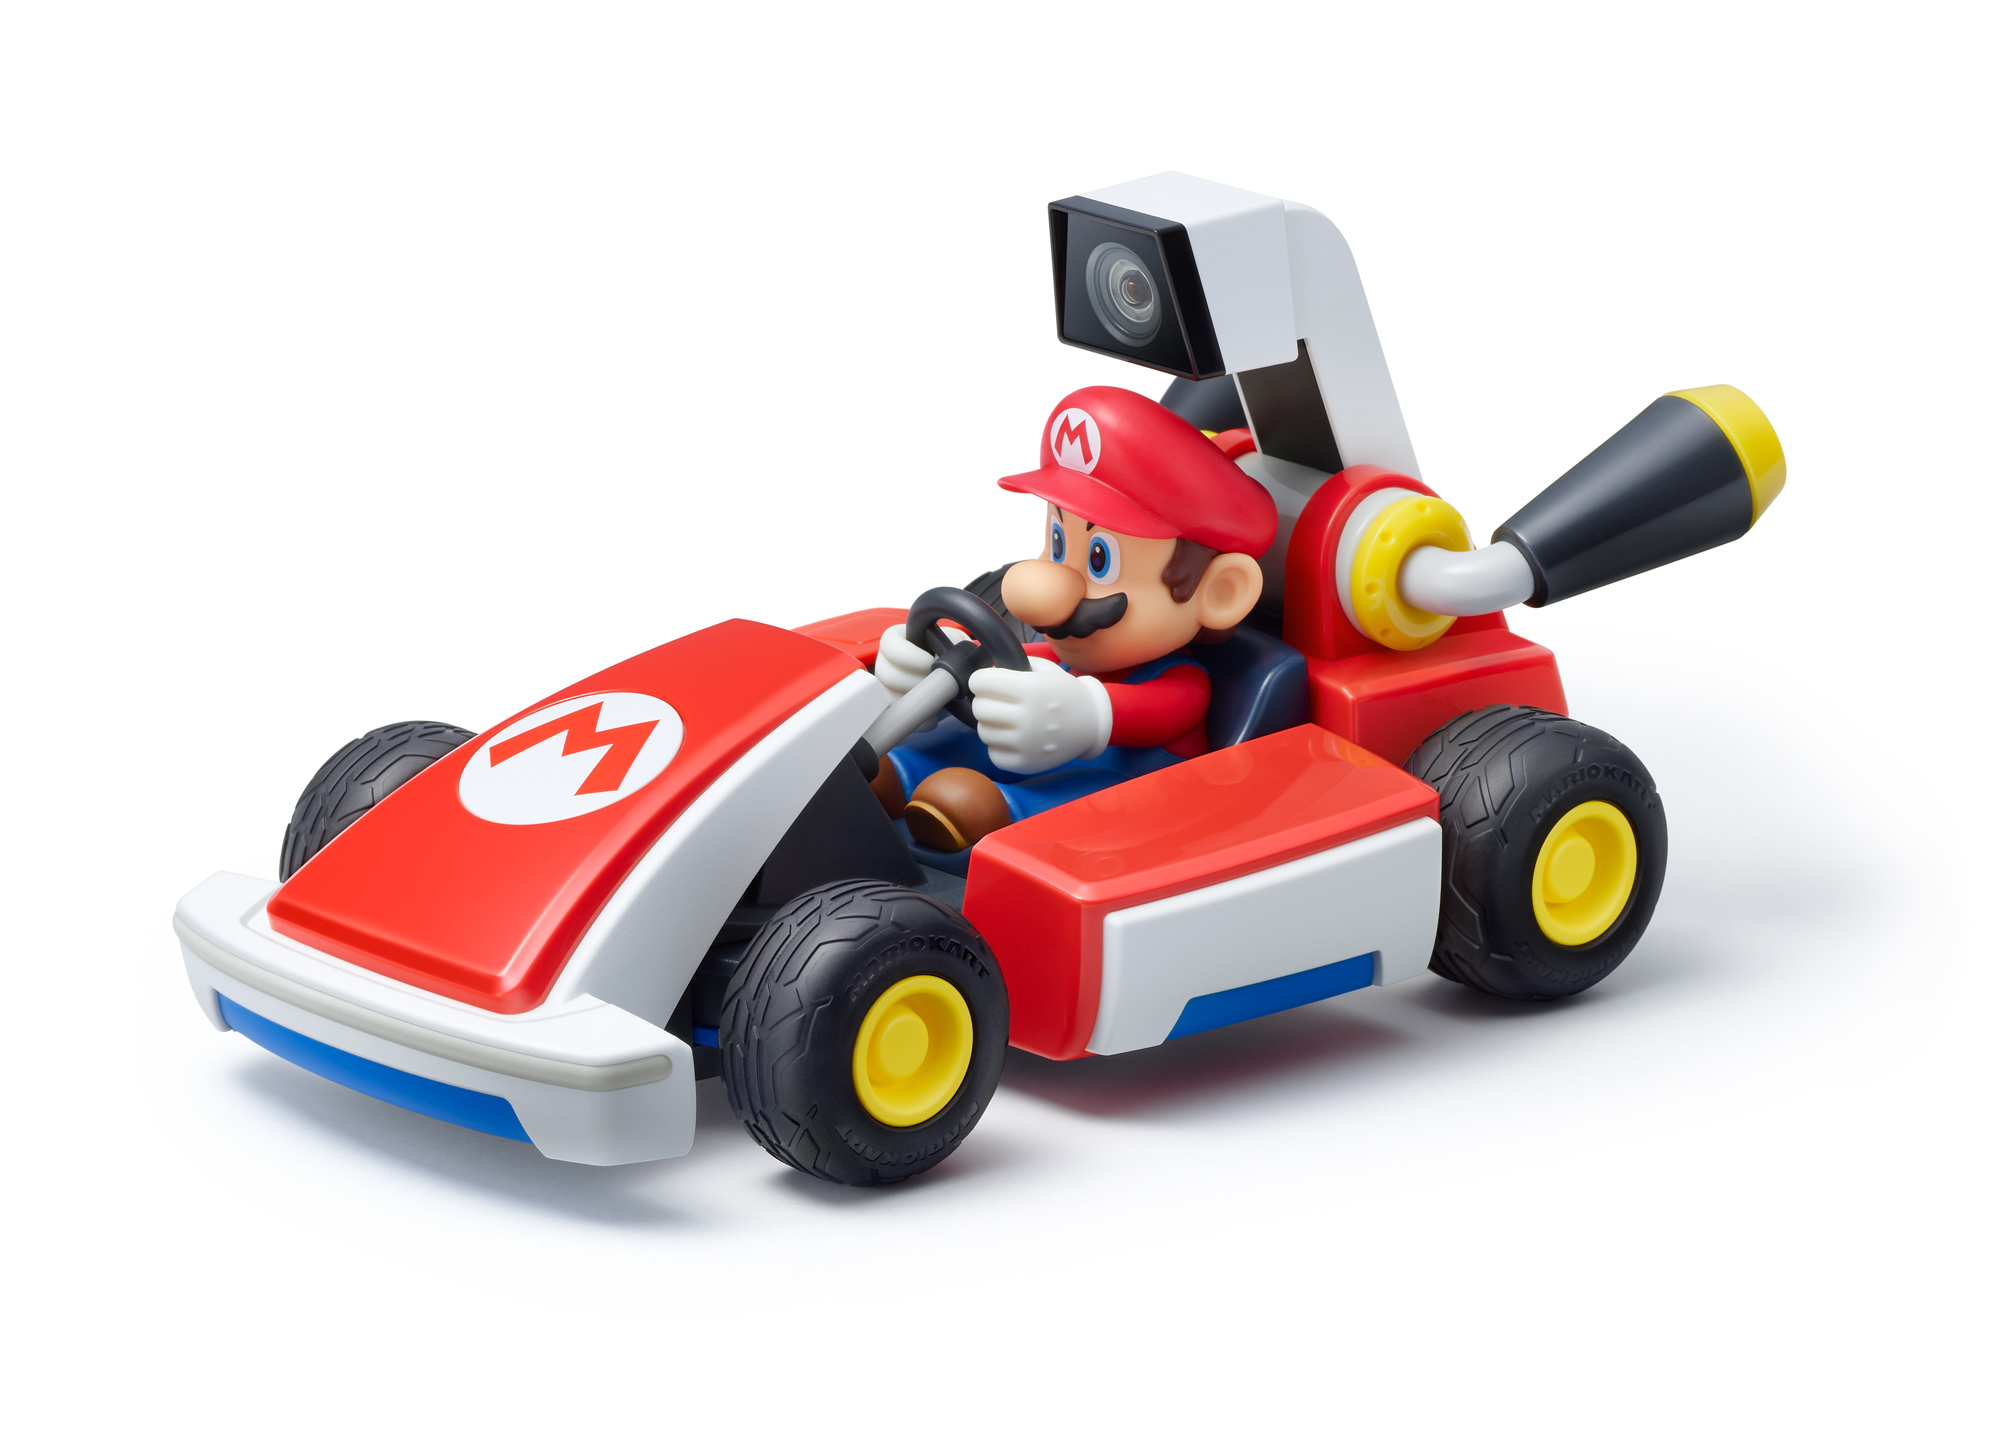 Mario Switch Live Kart Home Circuit [Nintendo - Mario Switch]